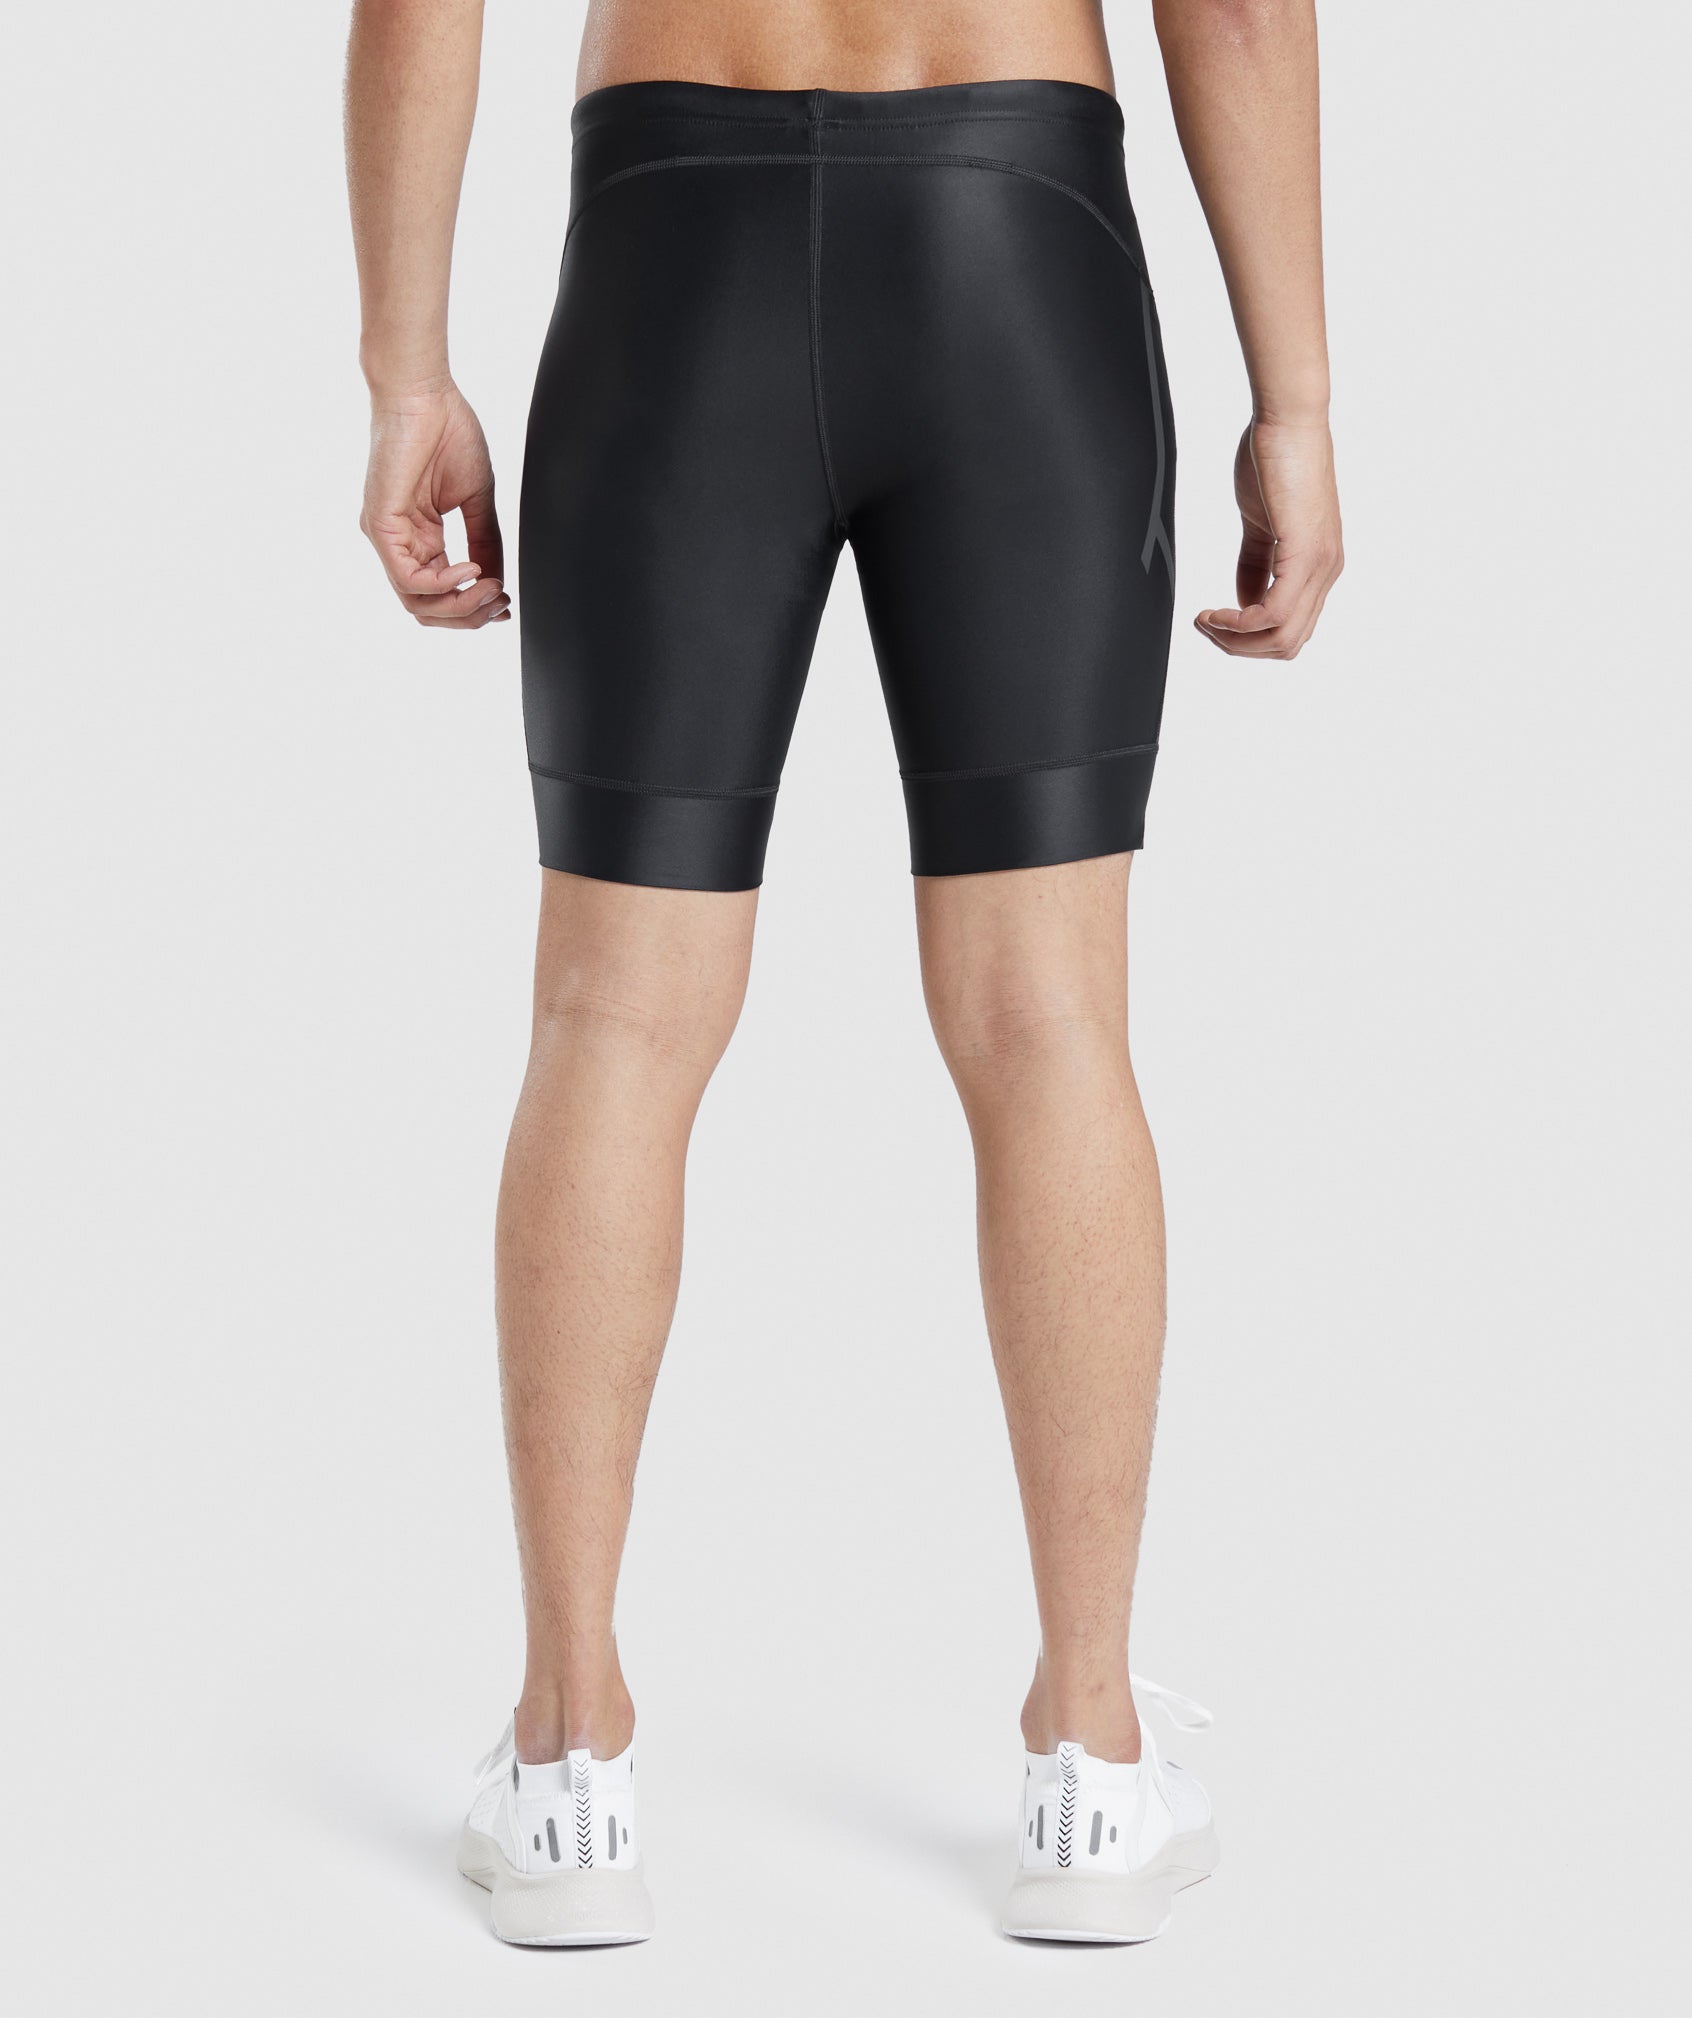 Gymshark Element Baselayer Shorts - Black  Compression clothing, Base  layer clothing, Compression wear